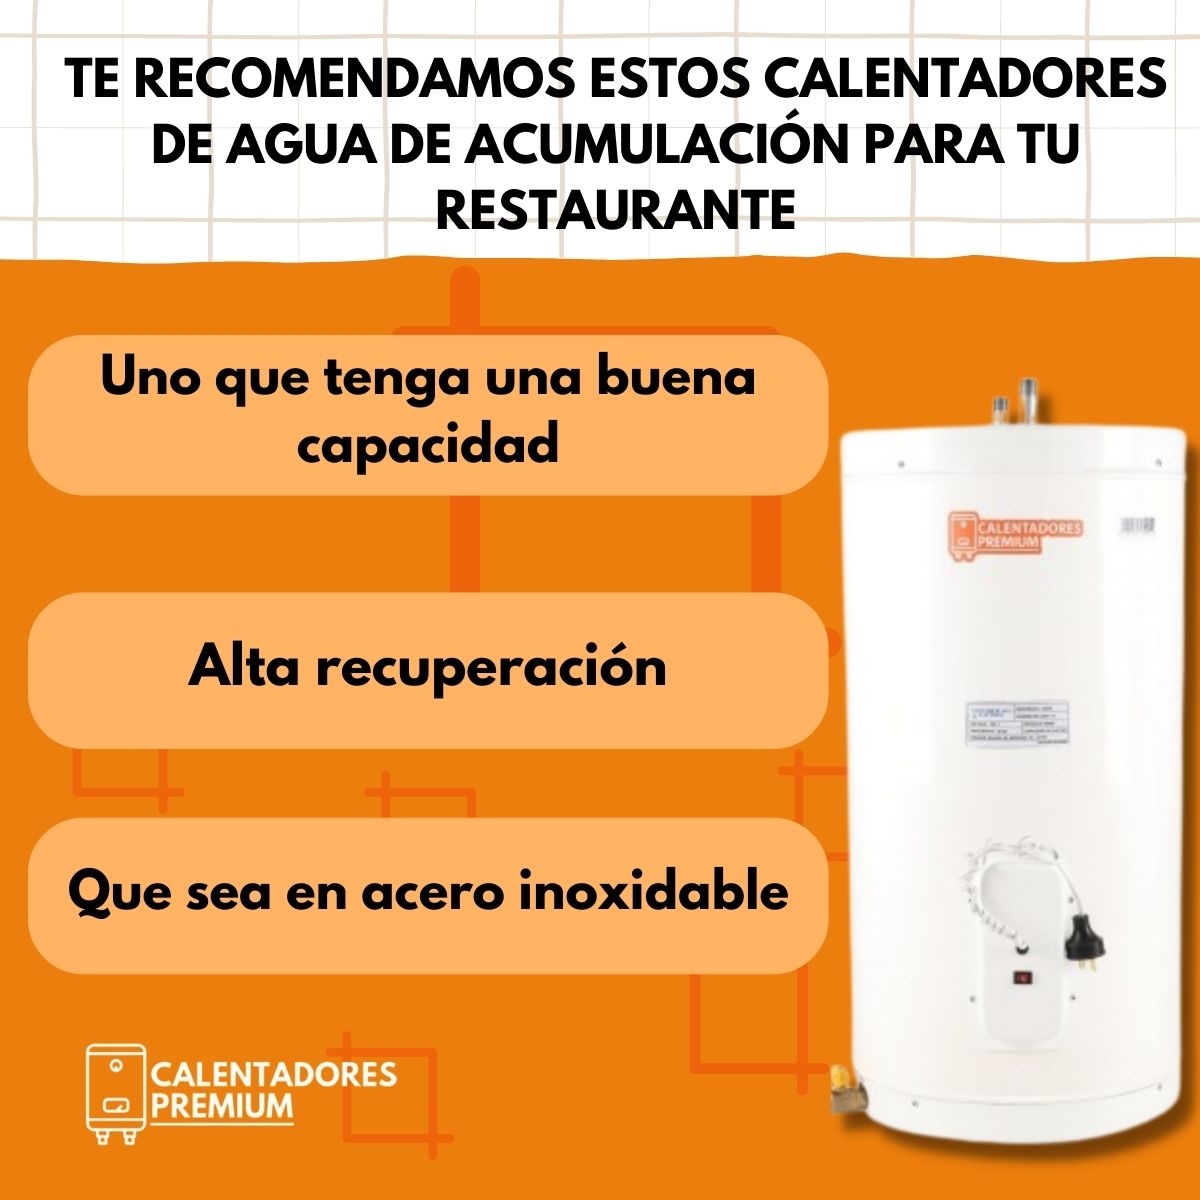 Te-recomendamos-estos-calentadores-de-agua-de-acumulacion-para-tu-restaurante-calentadorespremium-colombia-calentadores-premium-01